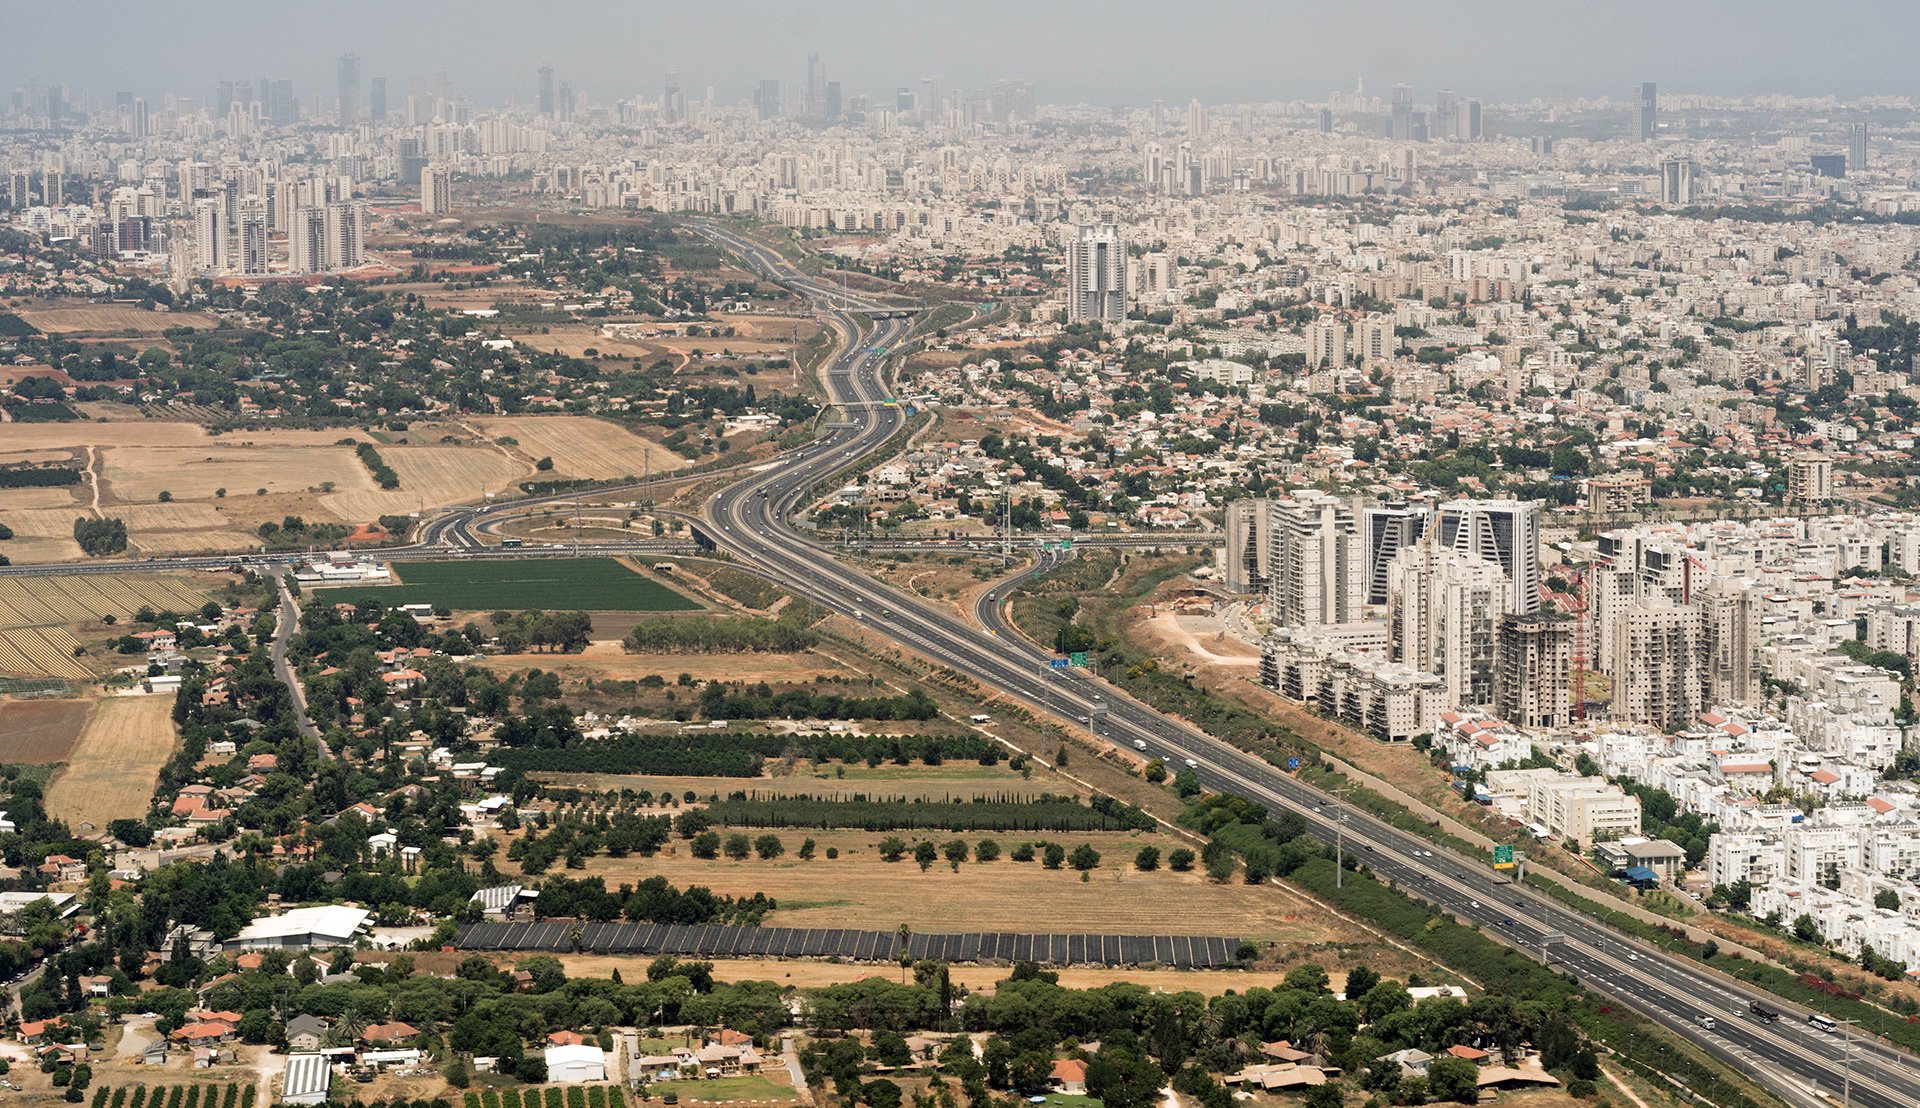 Rutgers Global – Aerial view of Tel Aviv, Israel